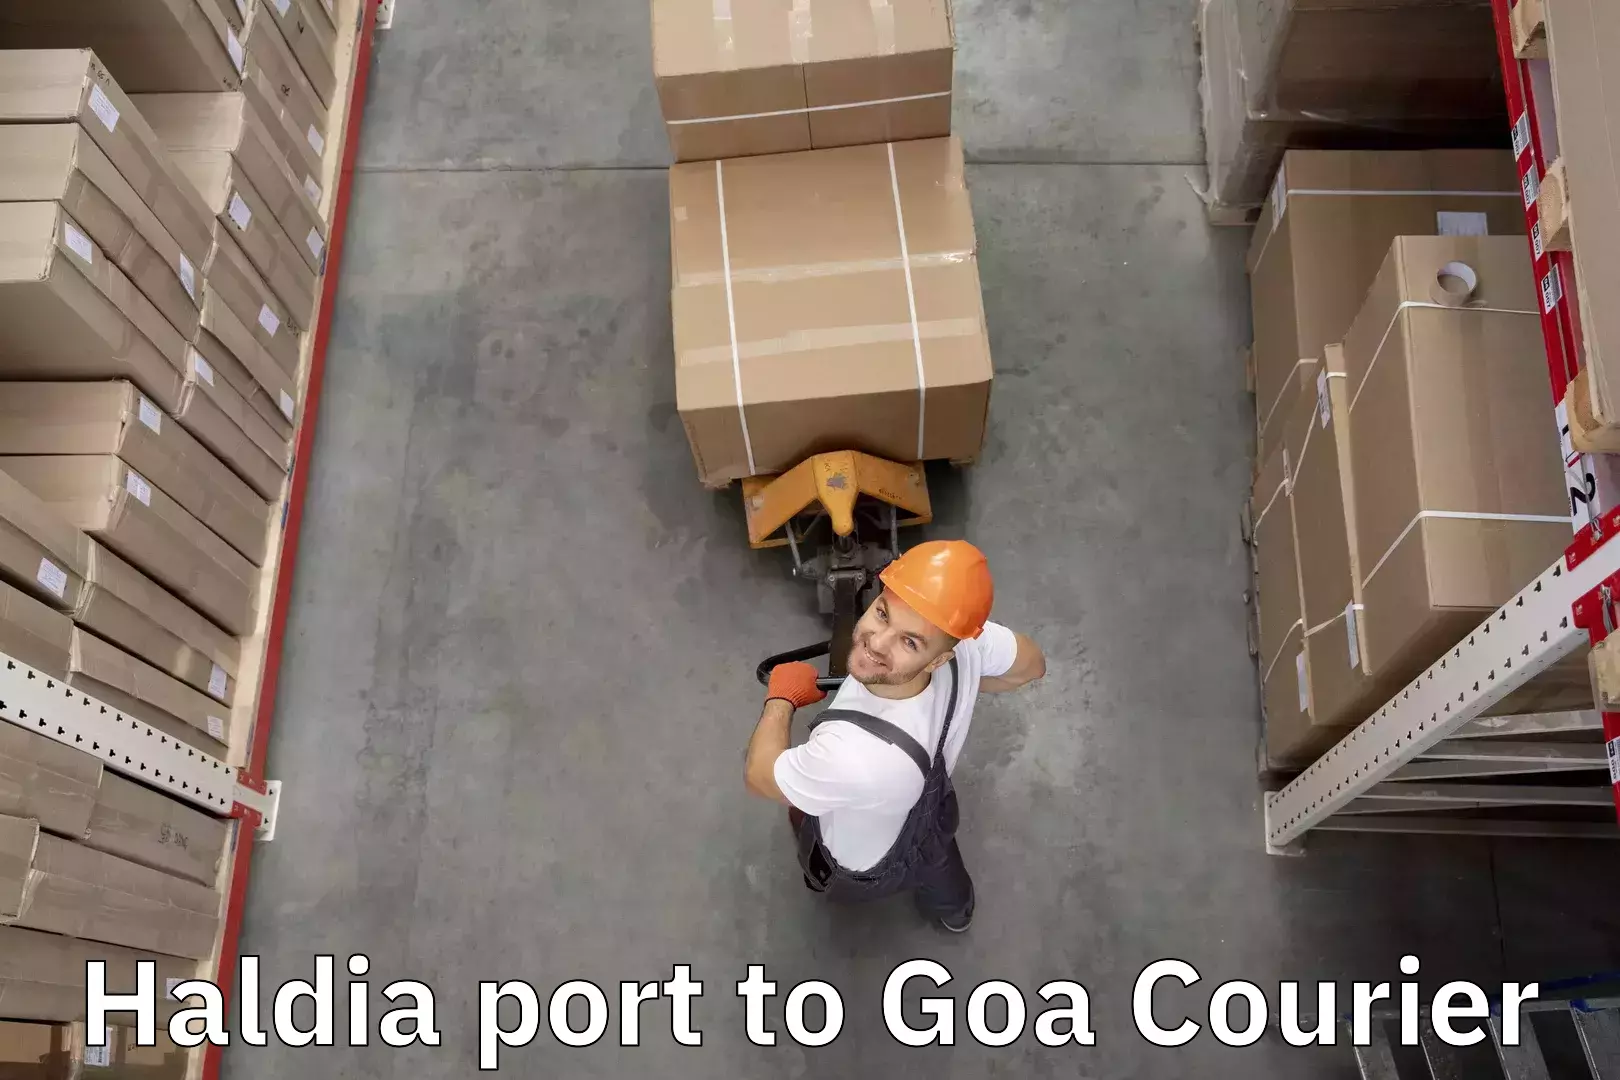 Same day luggage service Haldia port to South Goa